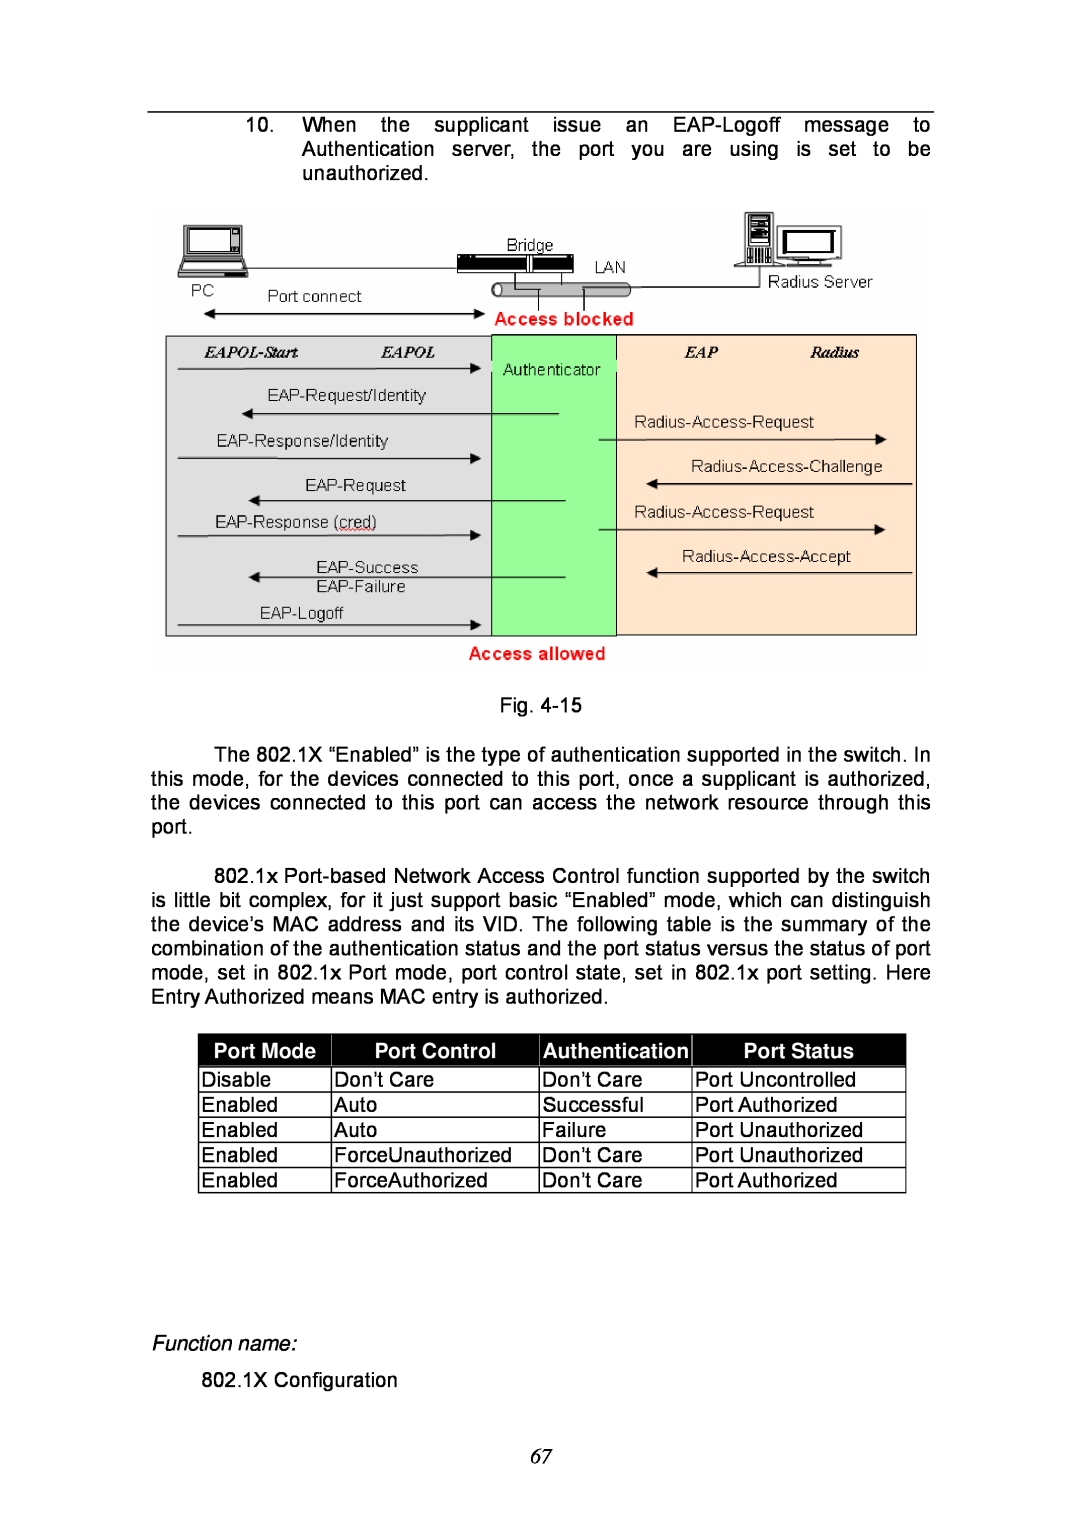 KTI Networks KGS-2404 manual Port Mode, Port Control, Authentication, Port Status, Function name 